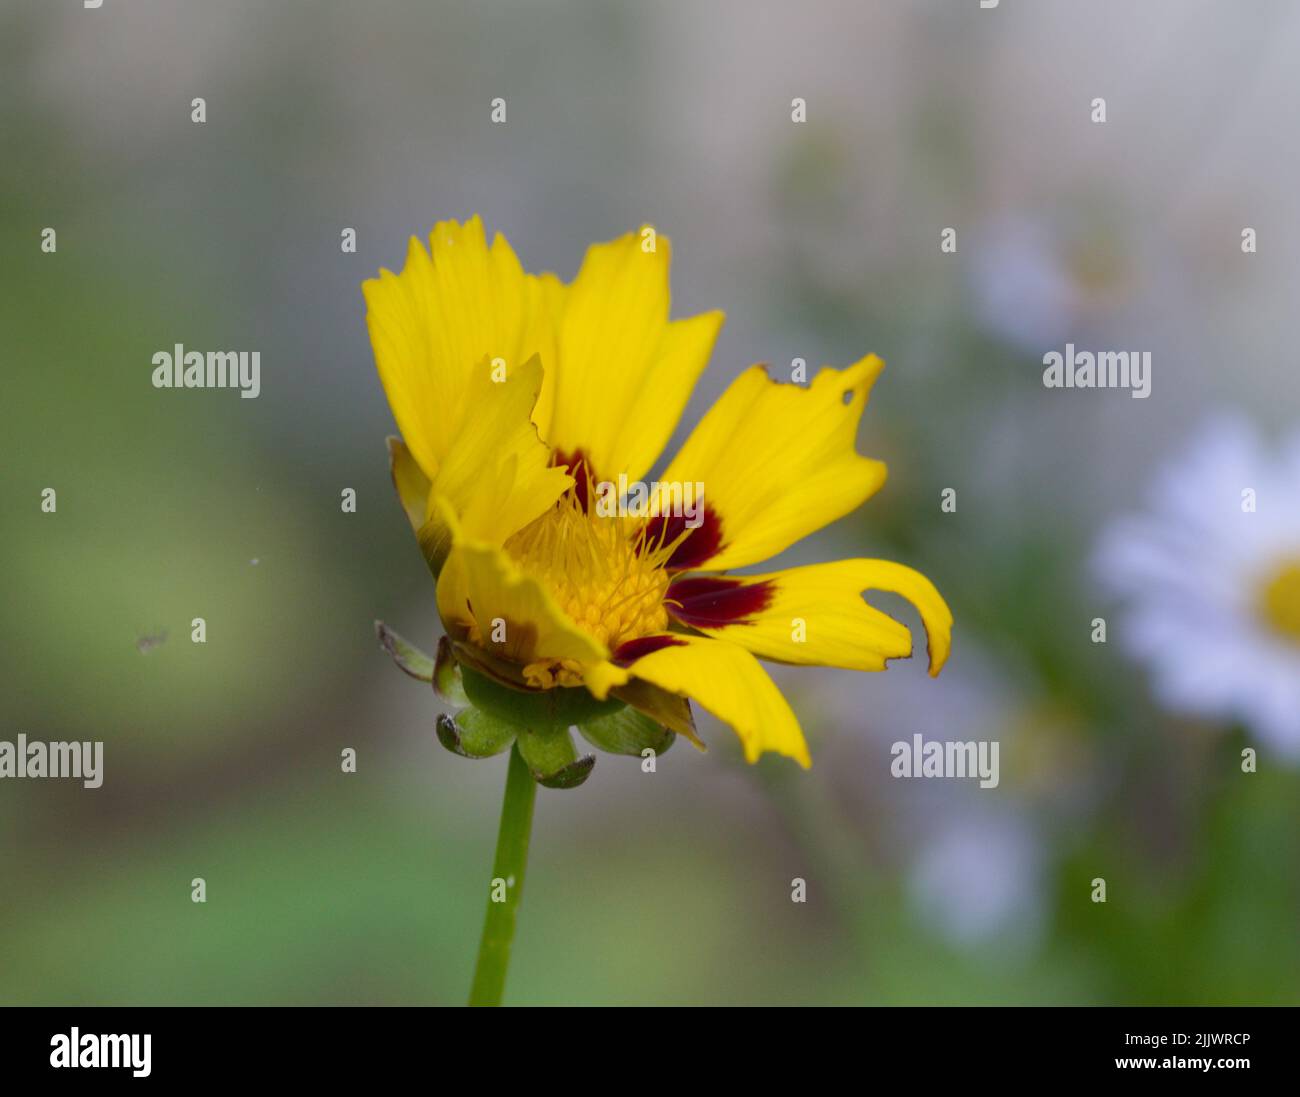 Macro photography of a yellow garden flower Stock Photo